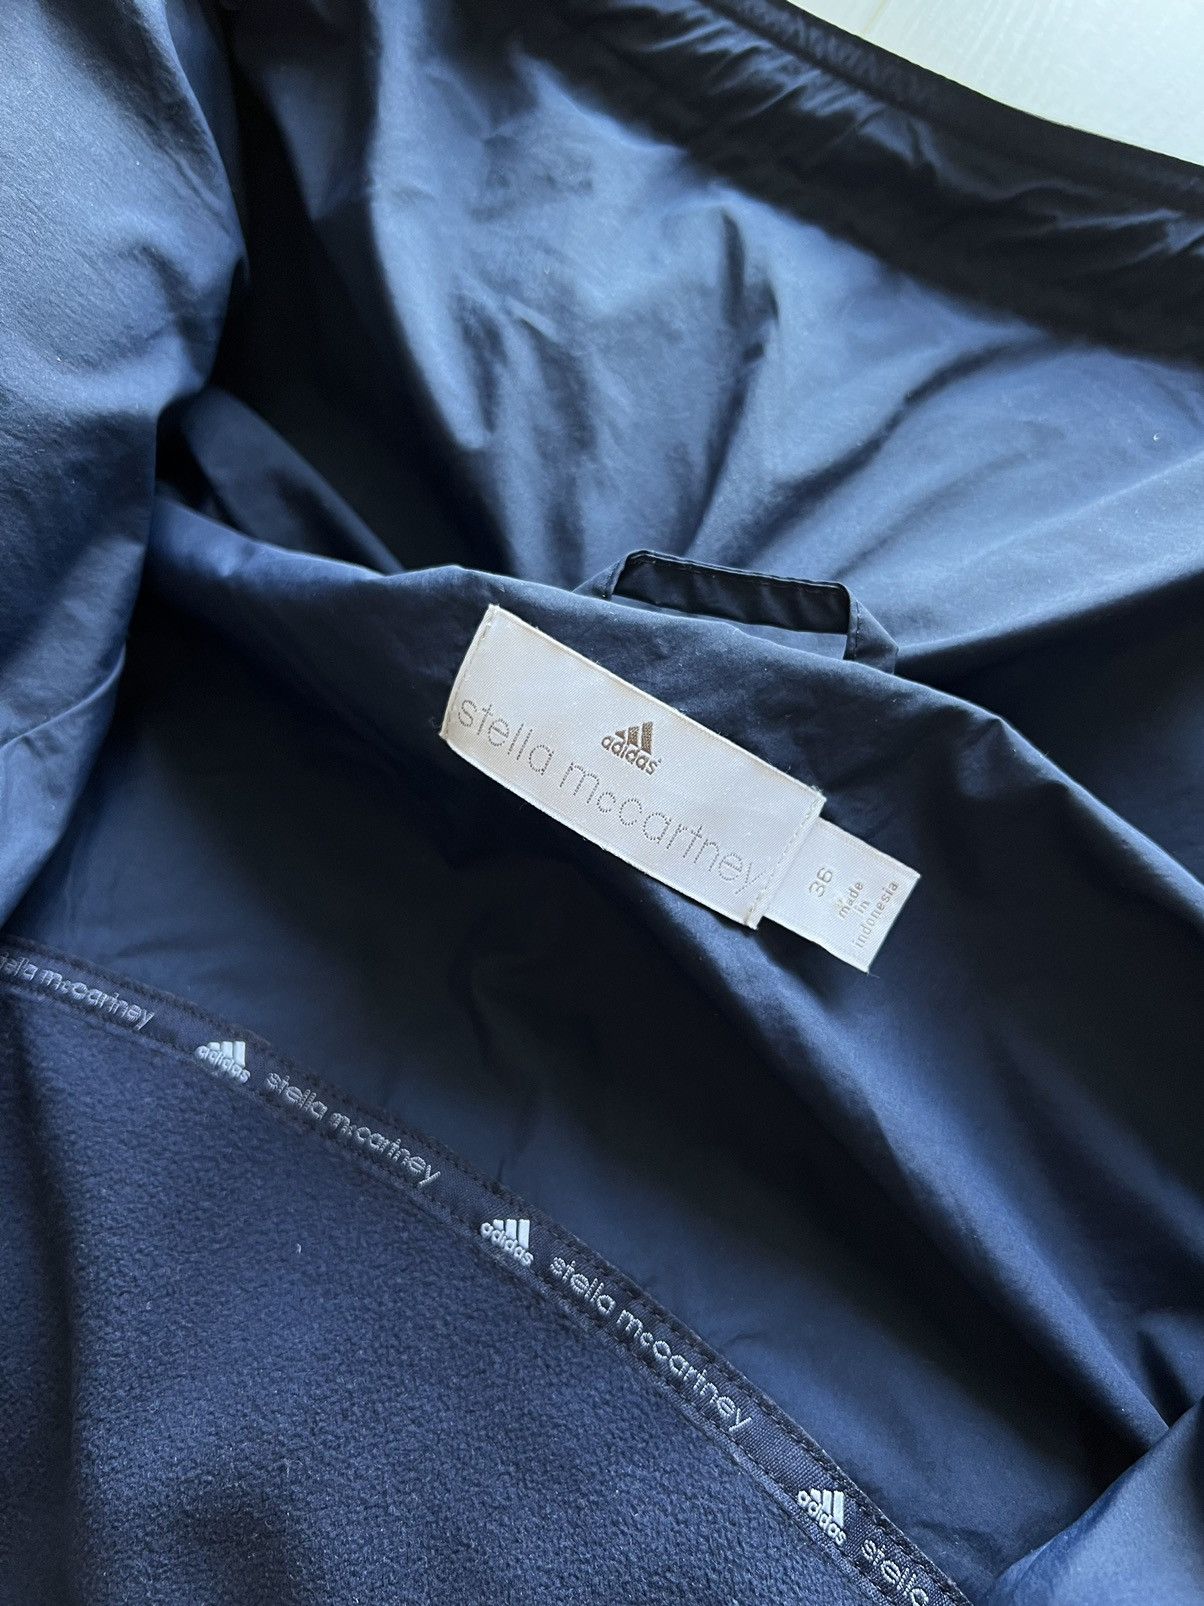 Adidas Adidas x Stella McCartney Oversized Puffer Jacket Sample 36 Size US M / EU 48-50 / 2 - 8 Thumbnail